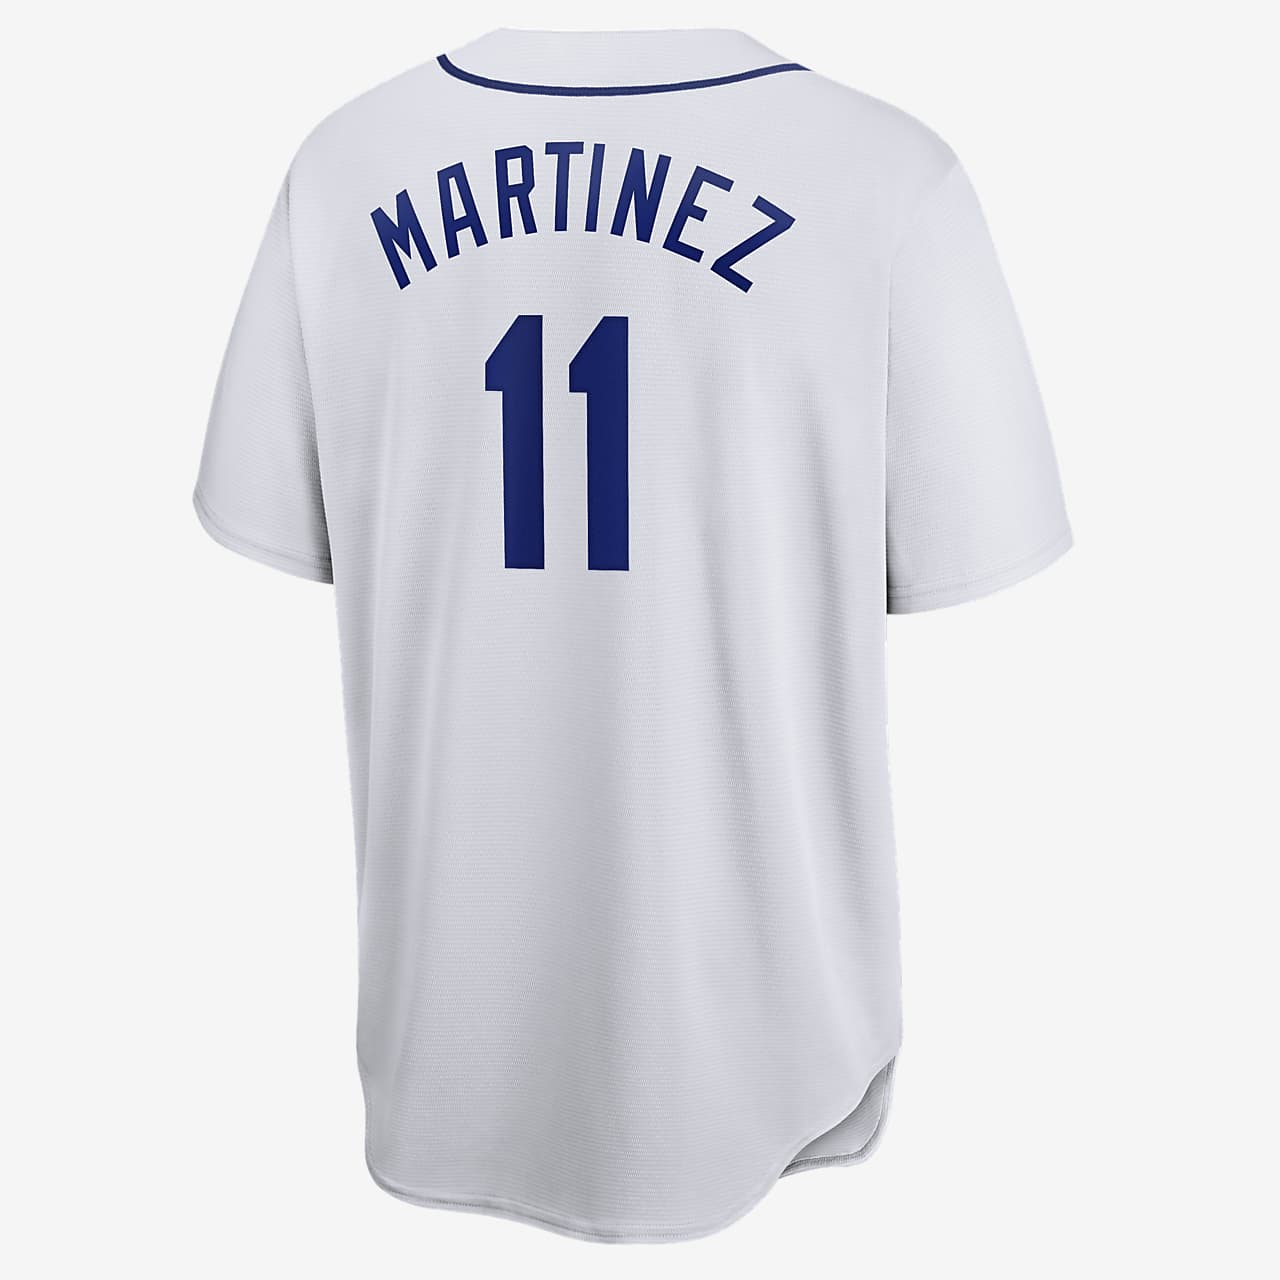 mariners baseball shirt